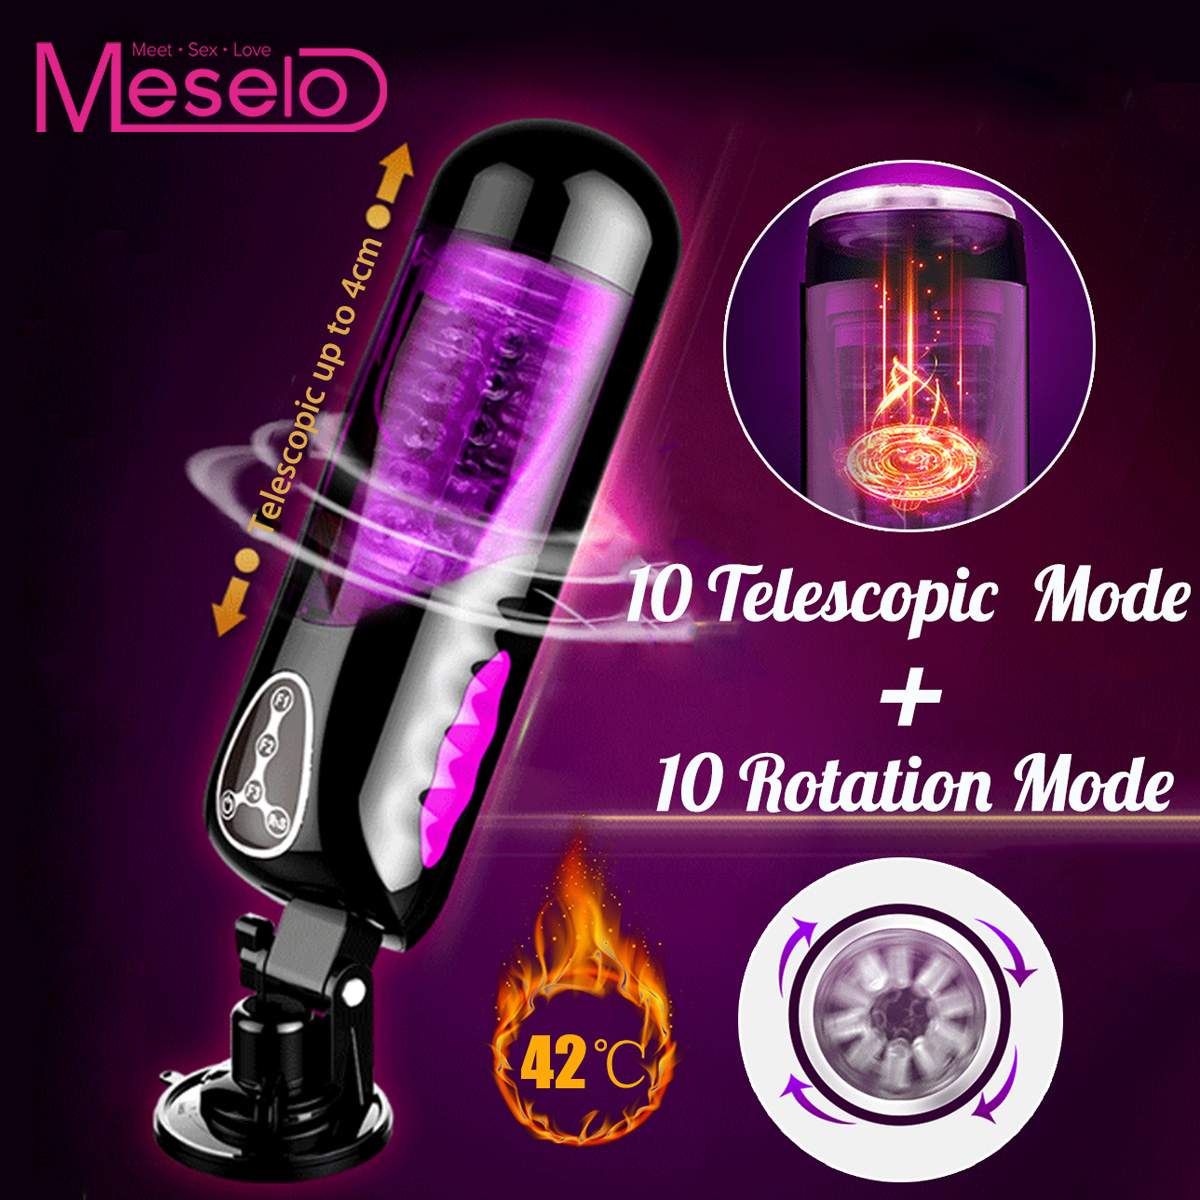 Meselo Automatic Heated Telescopic Rotating Voice Sex Machine Vagina Pussy Vibrator Sex Toys for Men Electric Male Masturbators